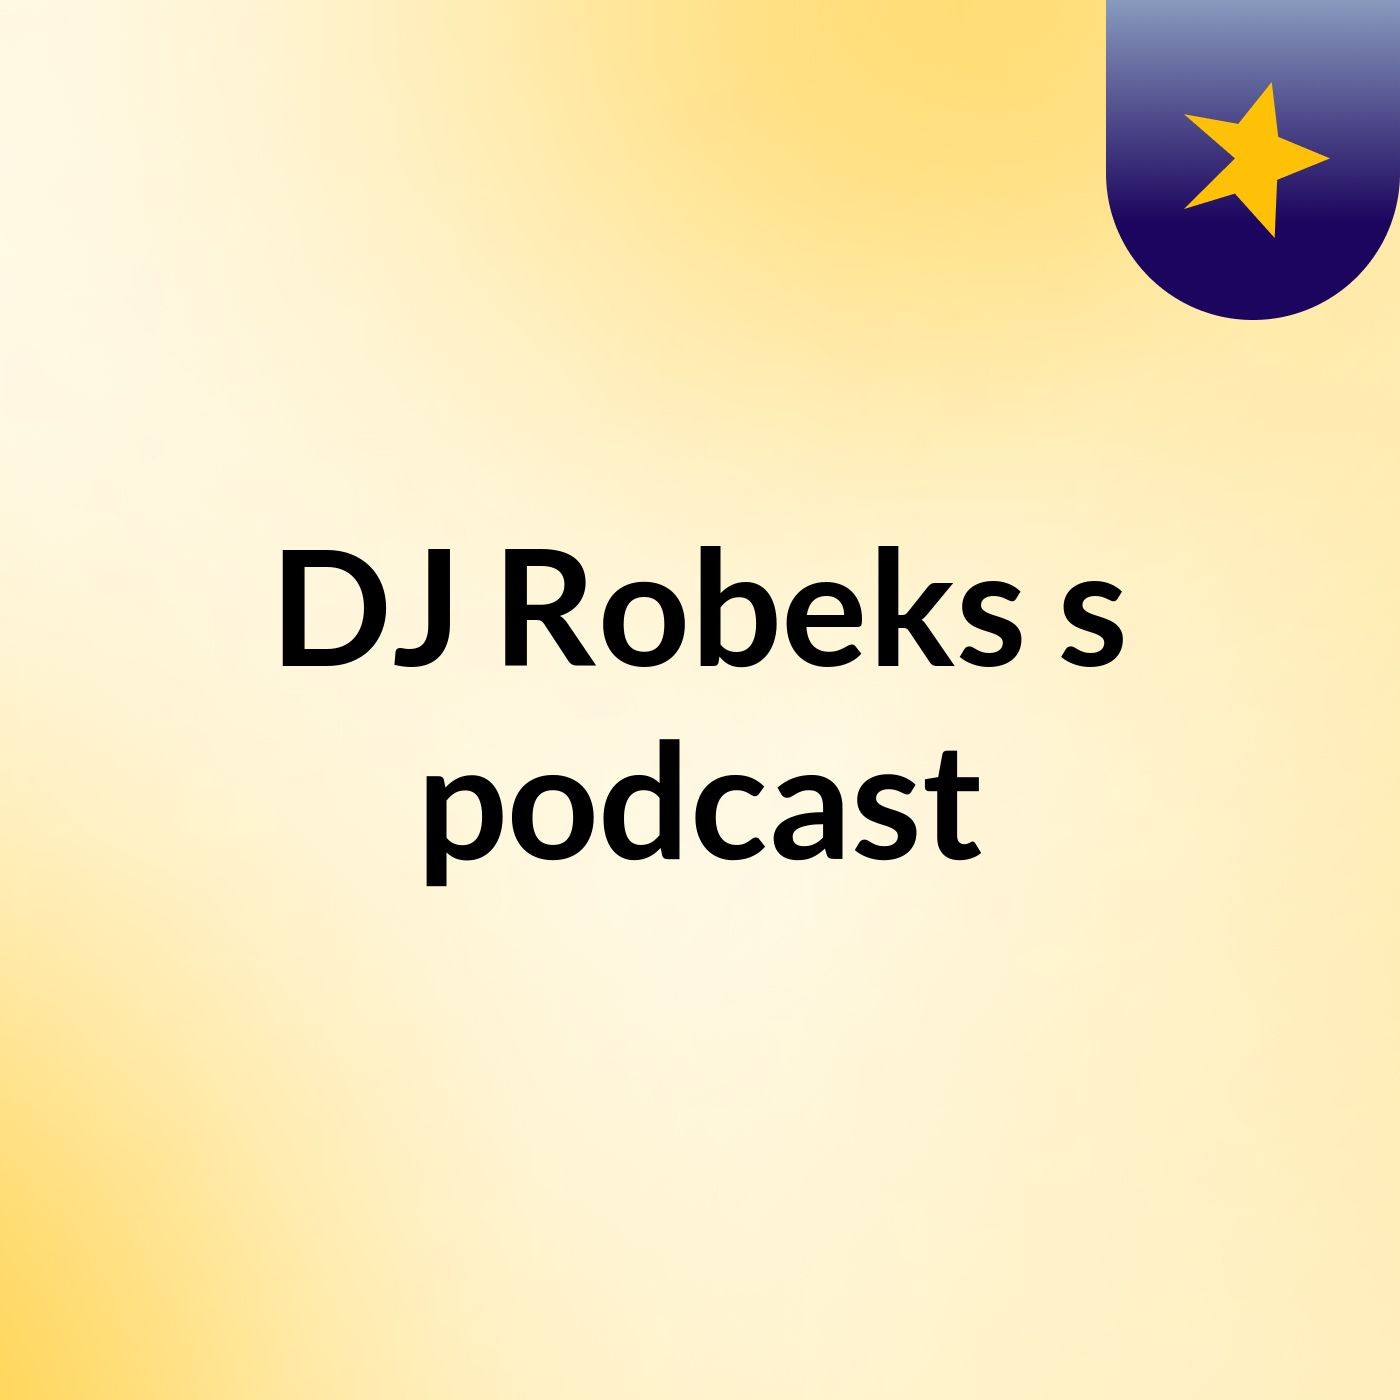 DJ Robeks's podcast